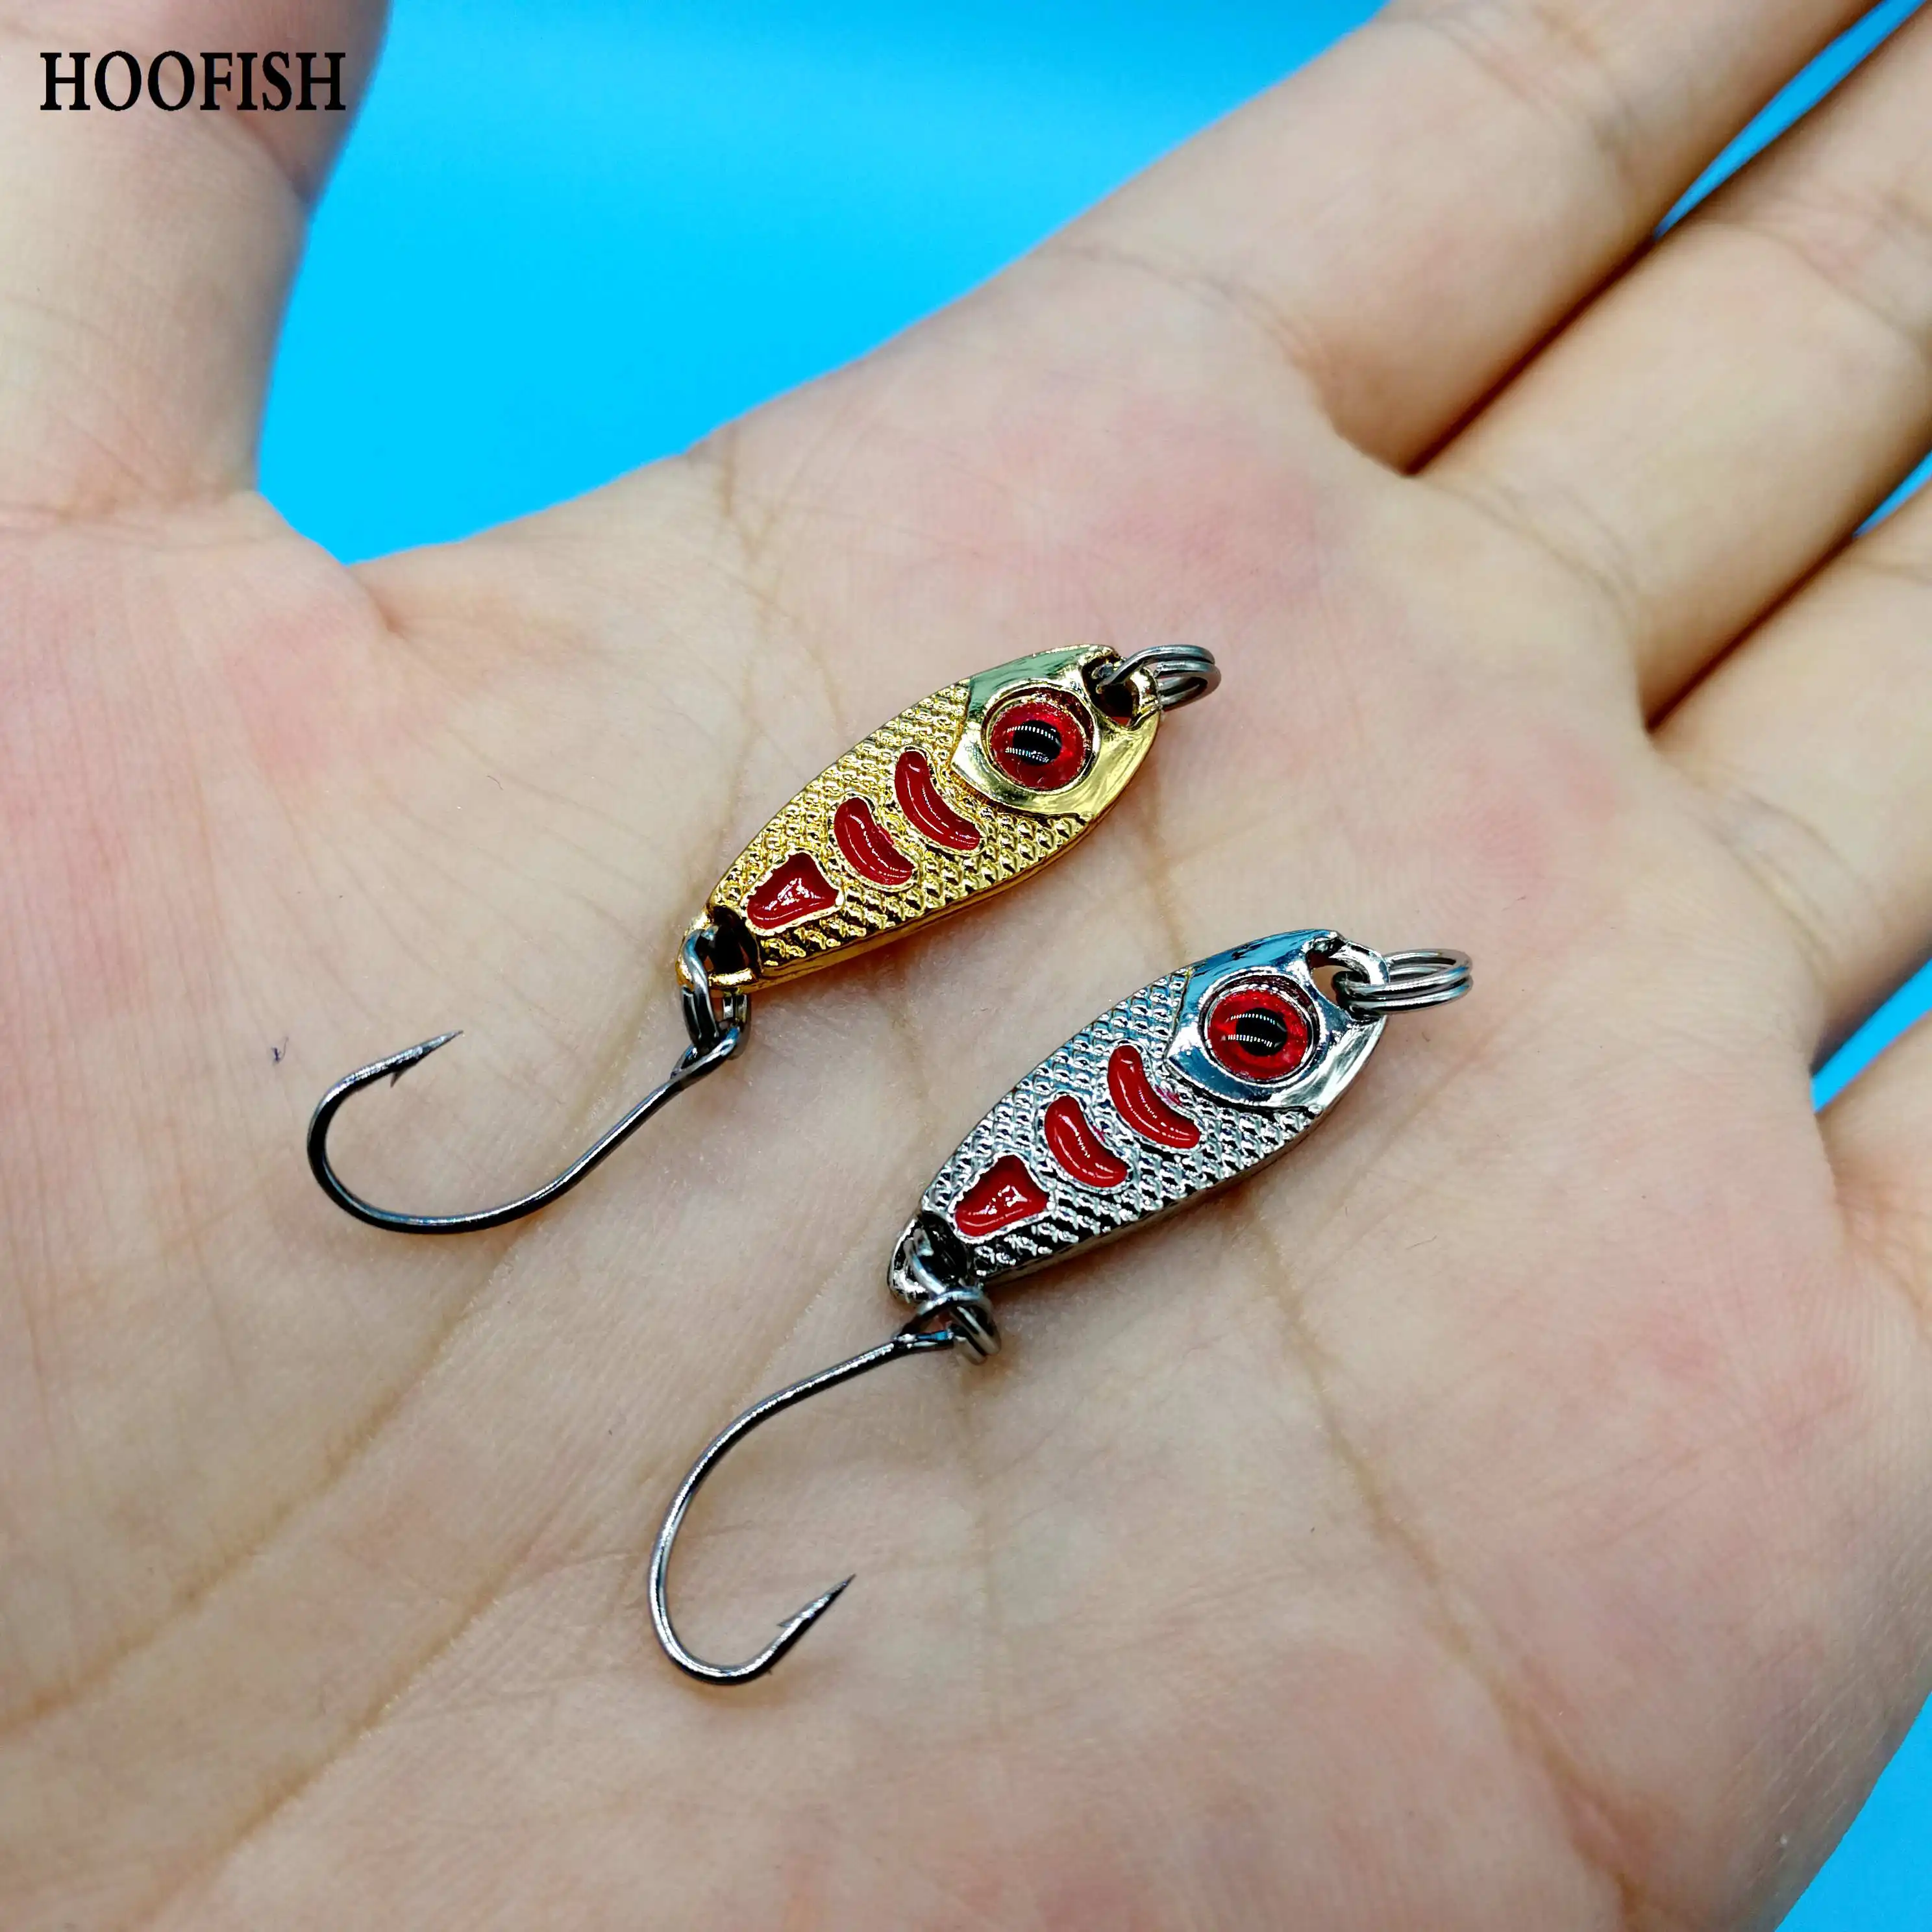 HOOFISH 10PCS/lot Micro Jig fishing lure 1.5g/2.5g/3.5g/5g Mini spoon lure  small fish bucktail jig metal lure spinner bait